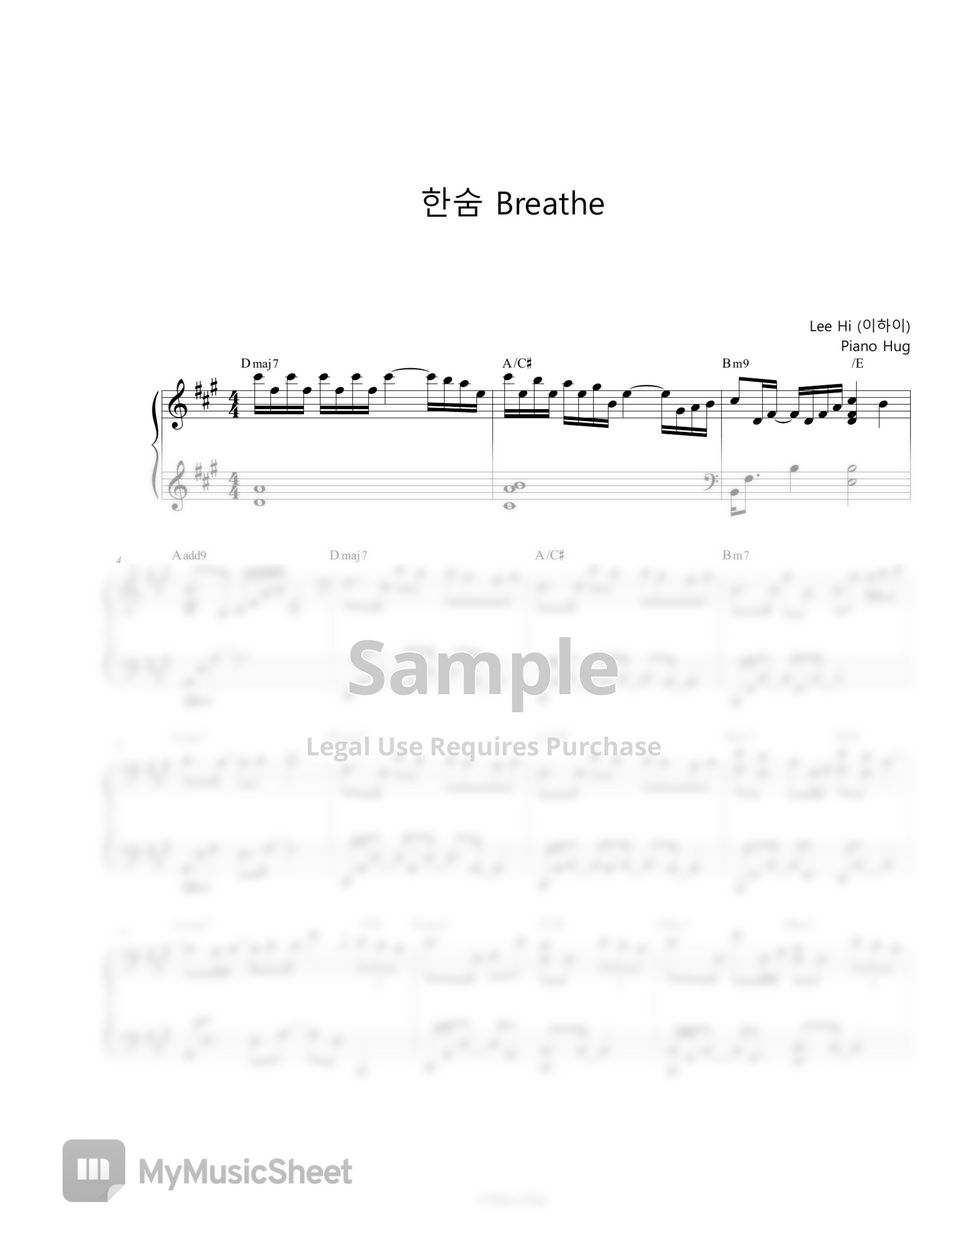 Lee Hi (이하이) - Breathe (한숨) by Piano Hug